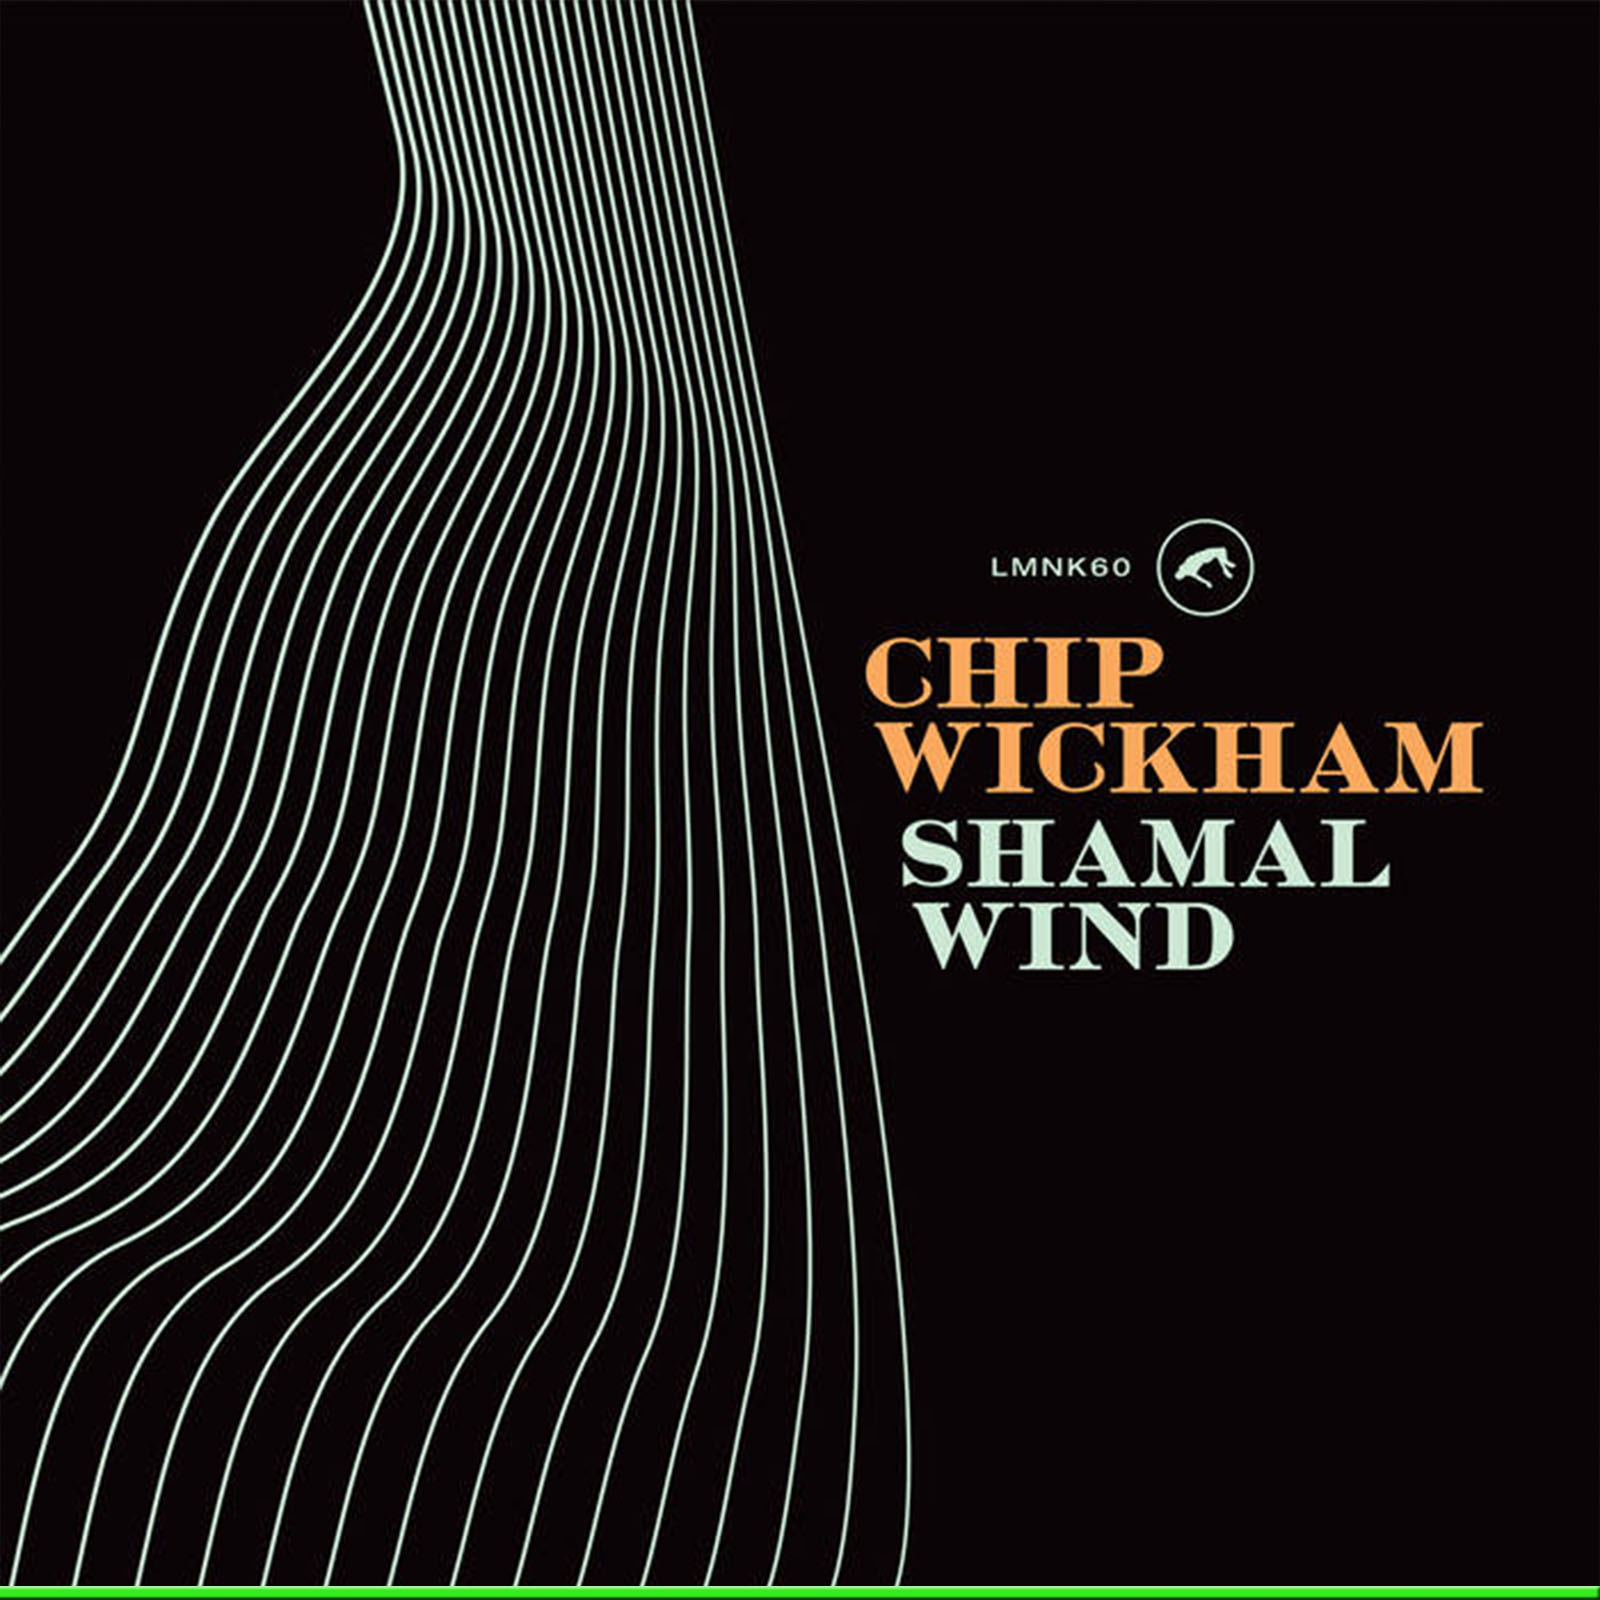 Modern Jazz Today, Chip Wickham